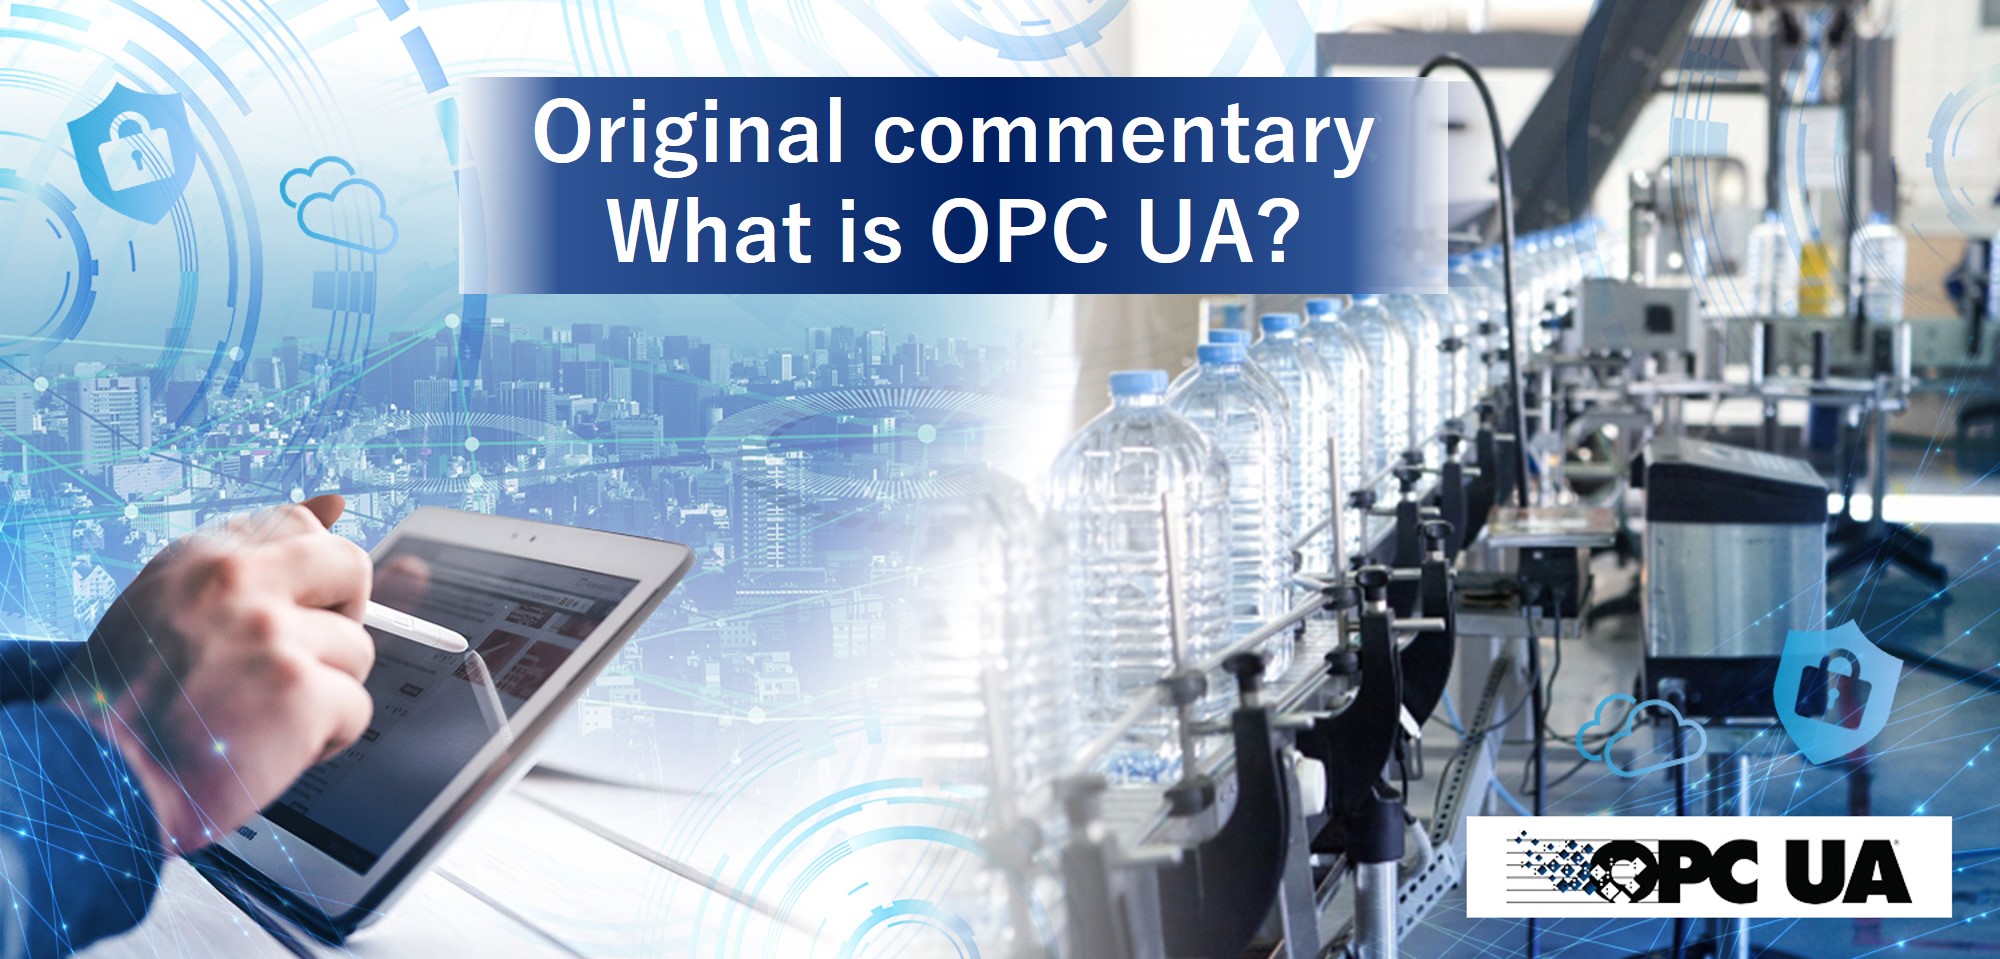 4. Activities of OPC UA (2) Compliance